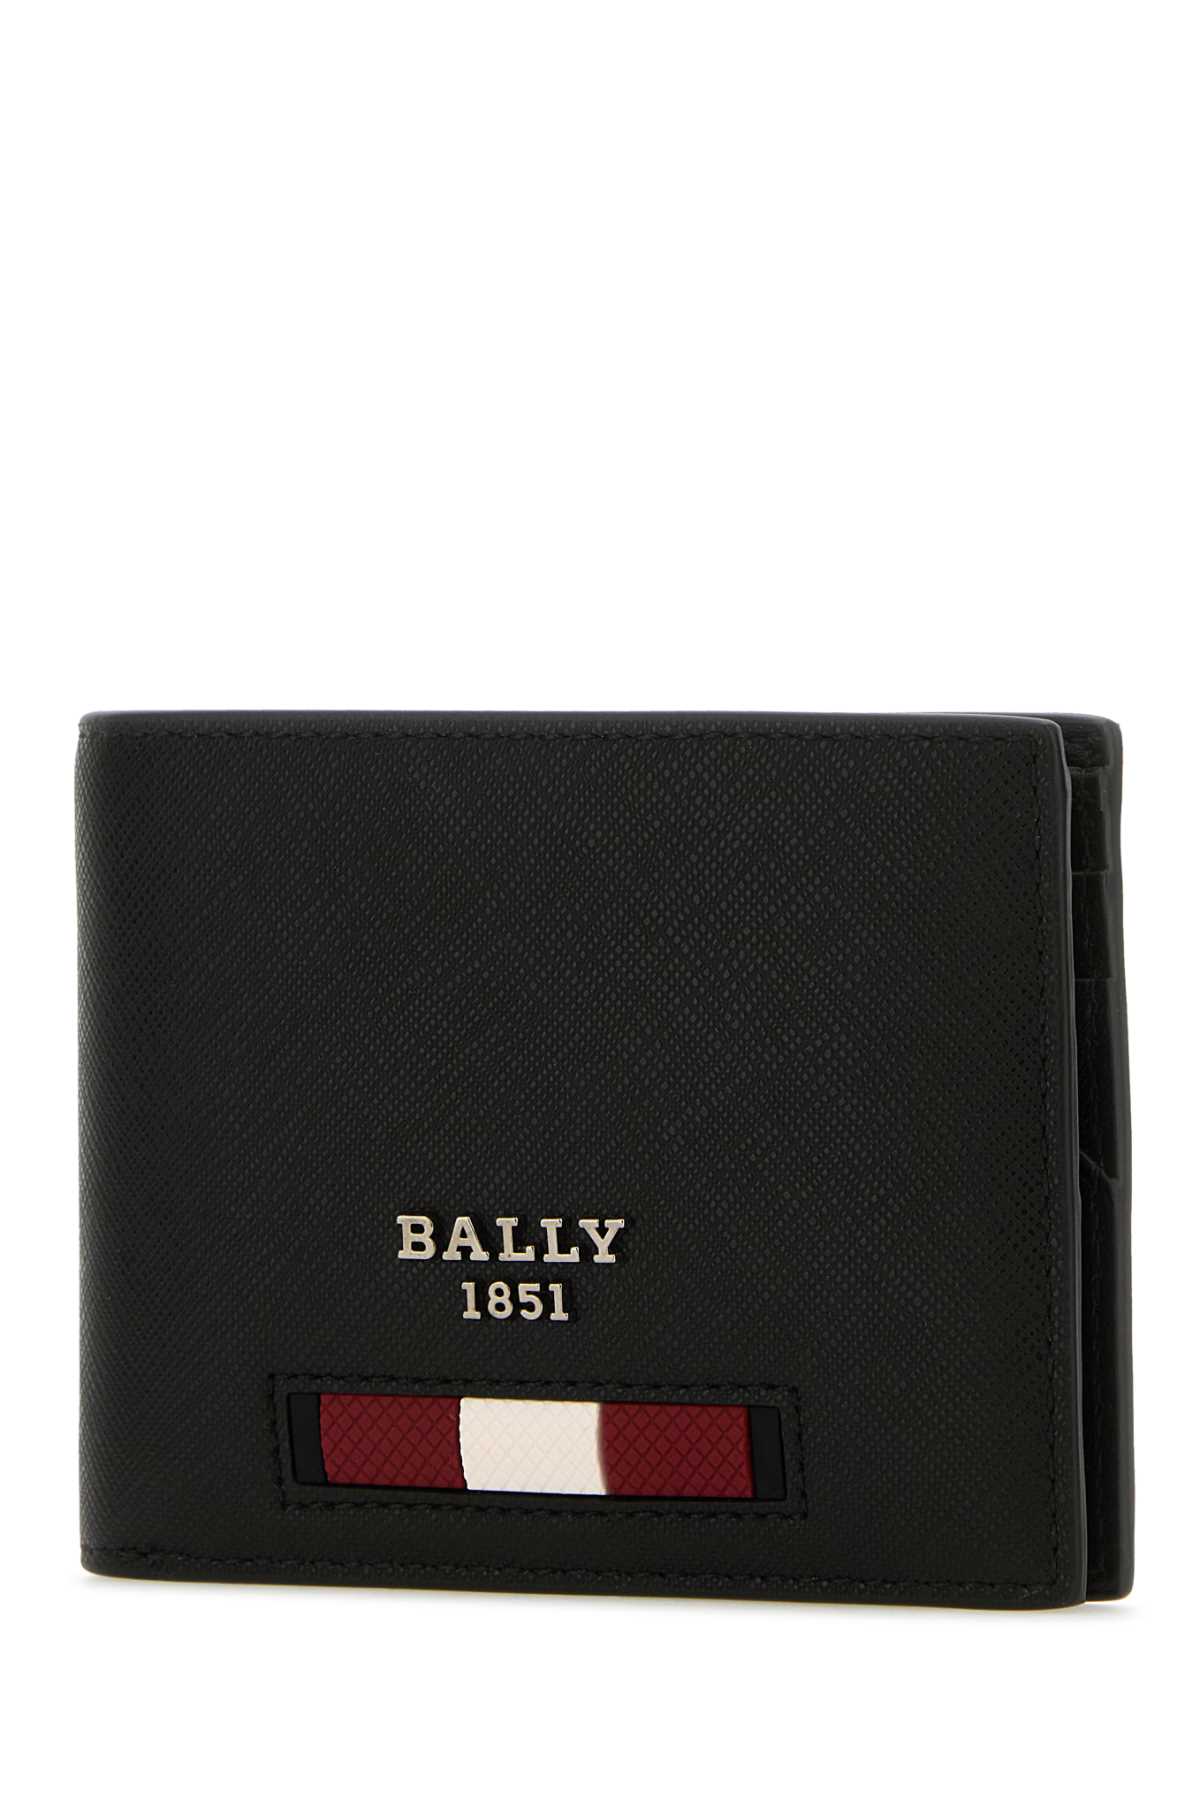 Bally Black Leather Bevye Wallet In F106